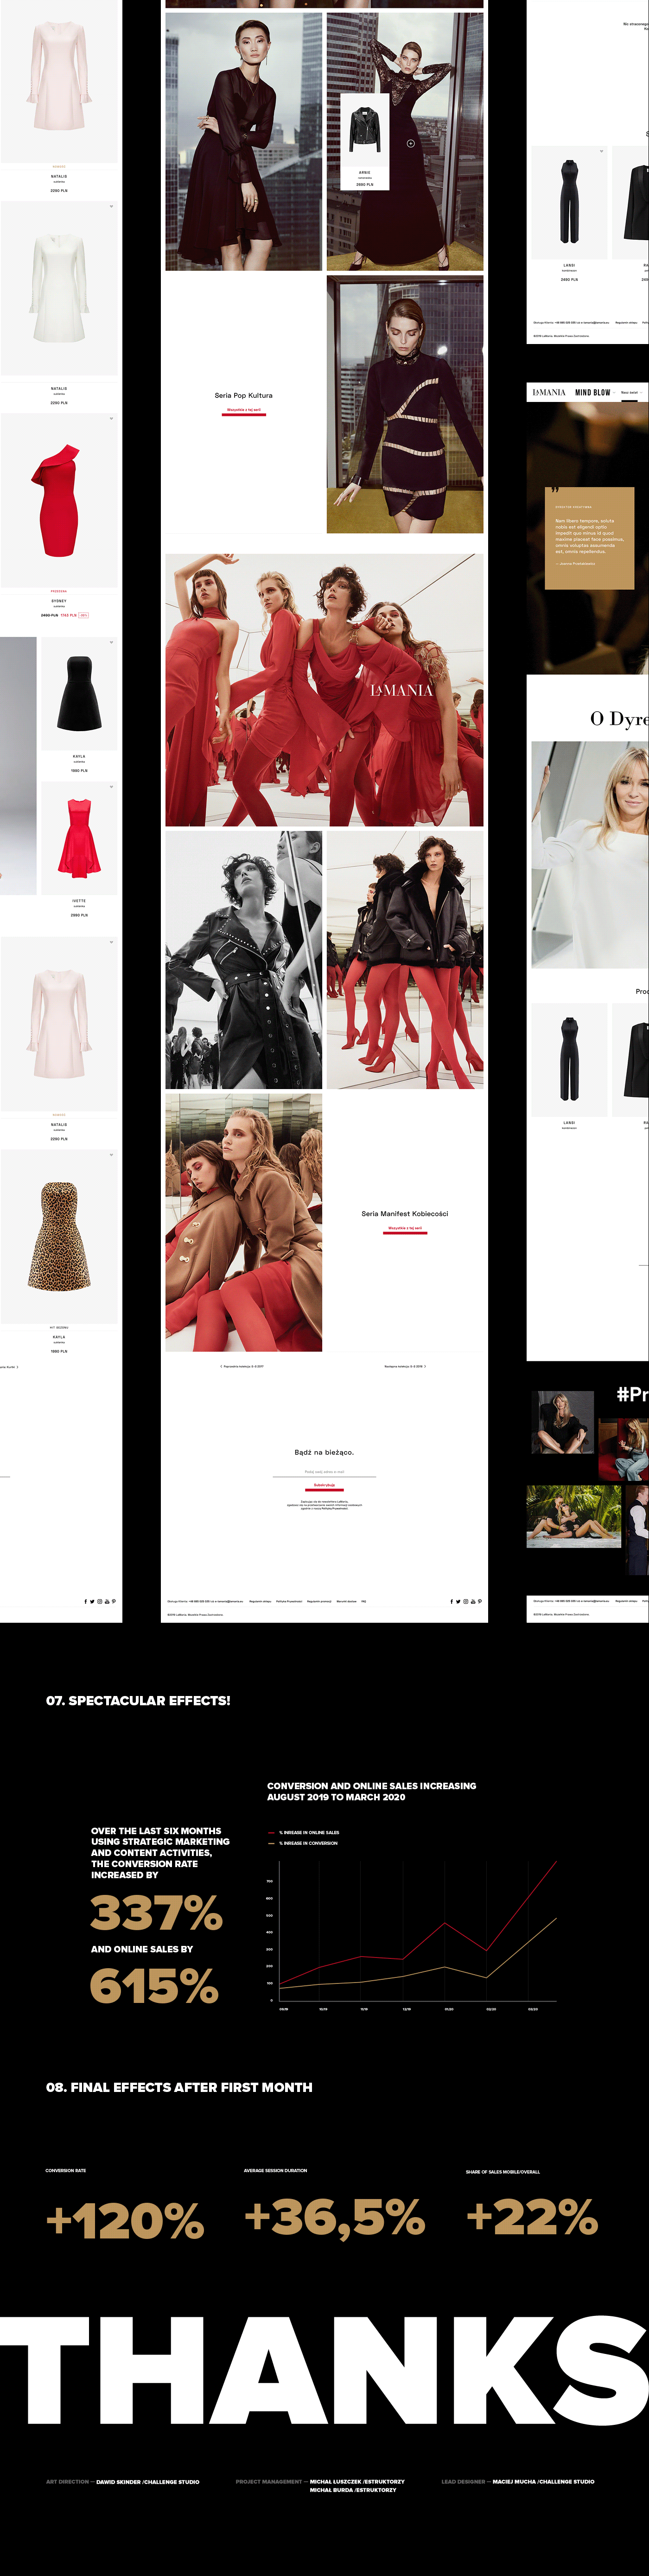 lamania la mania challenge studio poland Fashion  Fashion Store e-commerce online store mind blow  Ecommerce